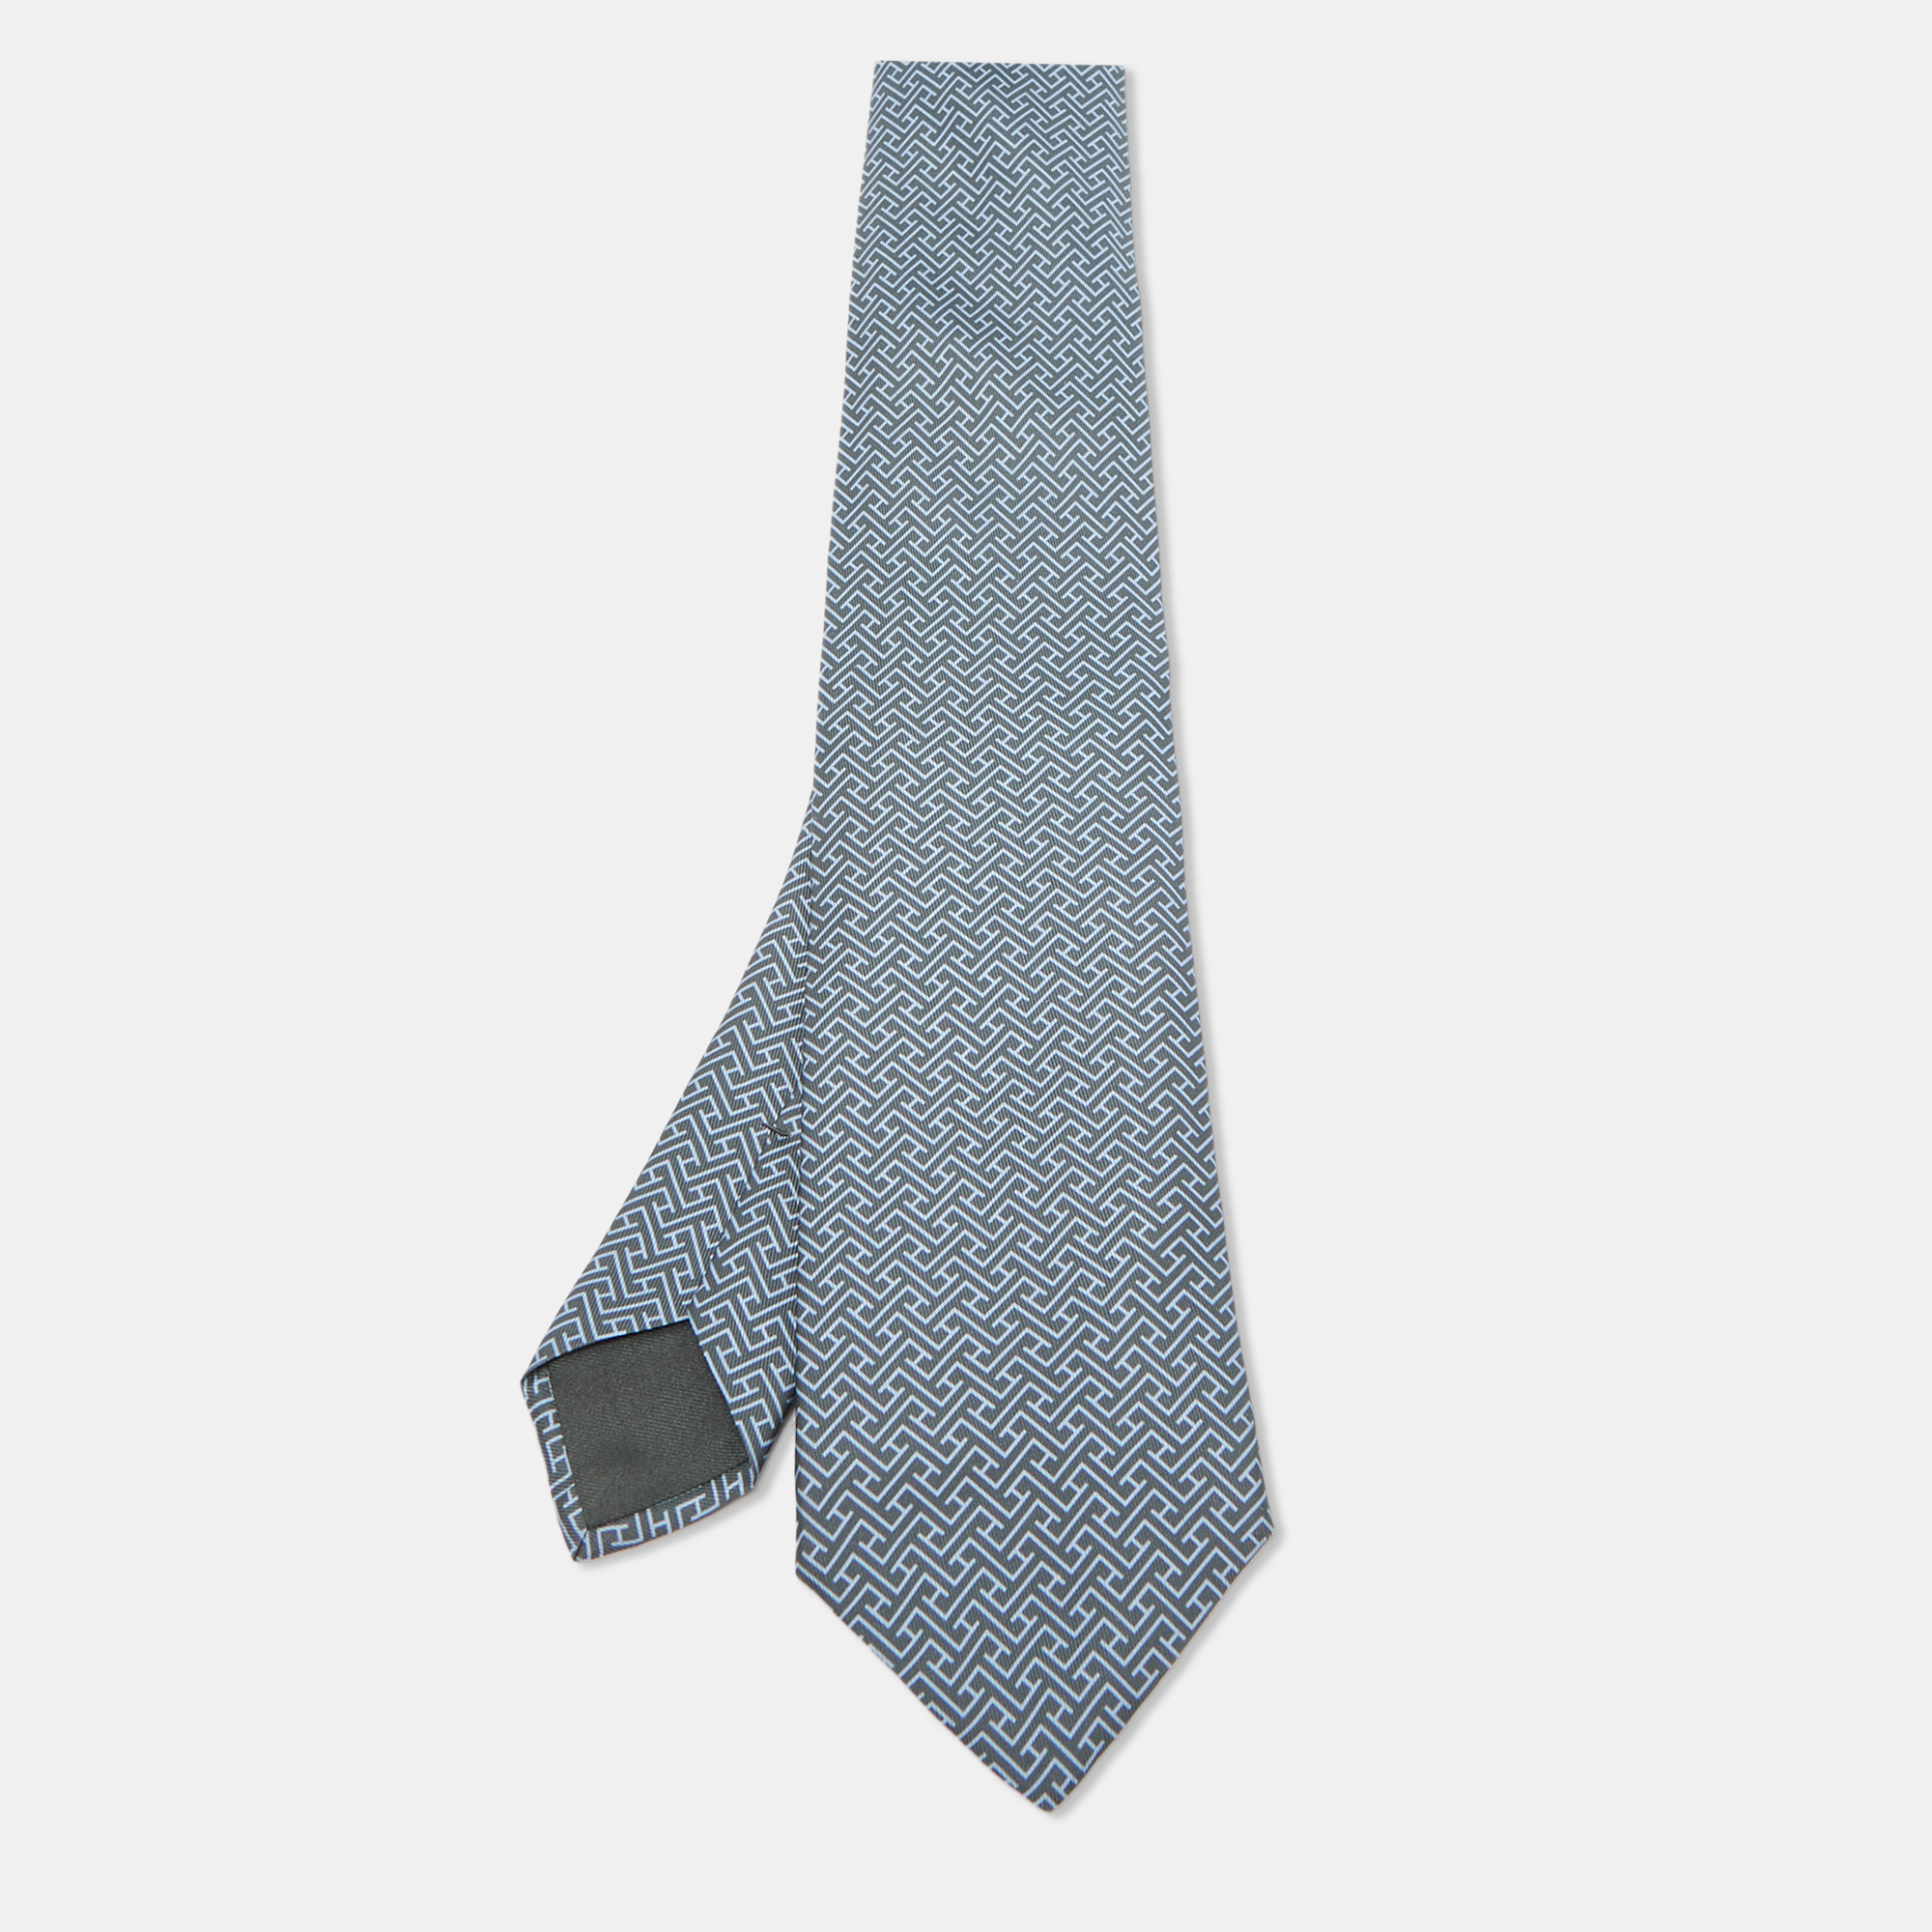 Hermes herm&egrave;s blue h printed silk tie